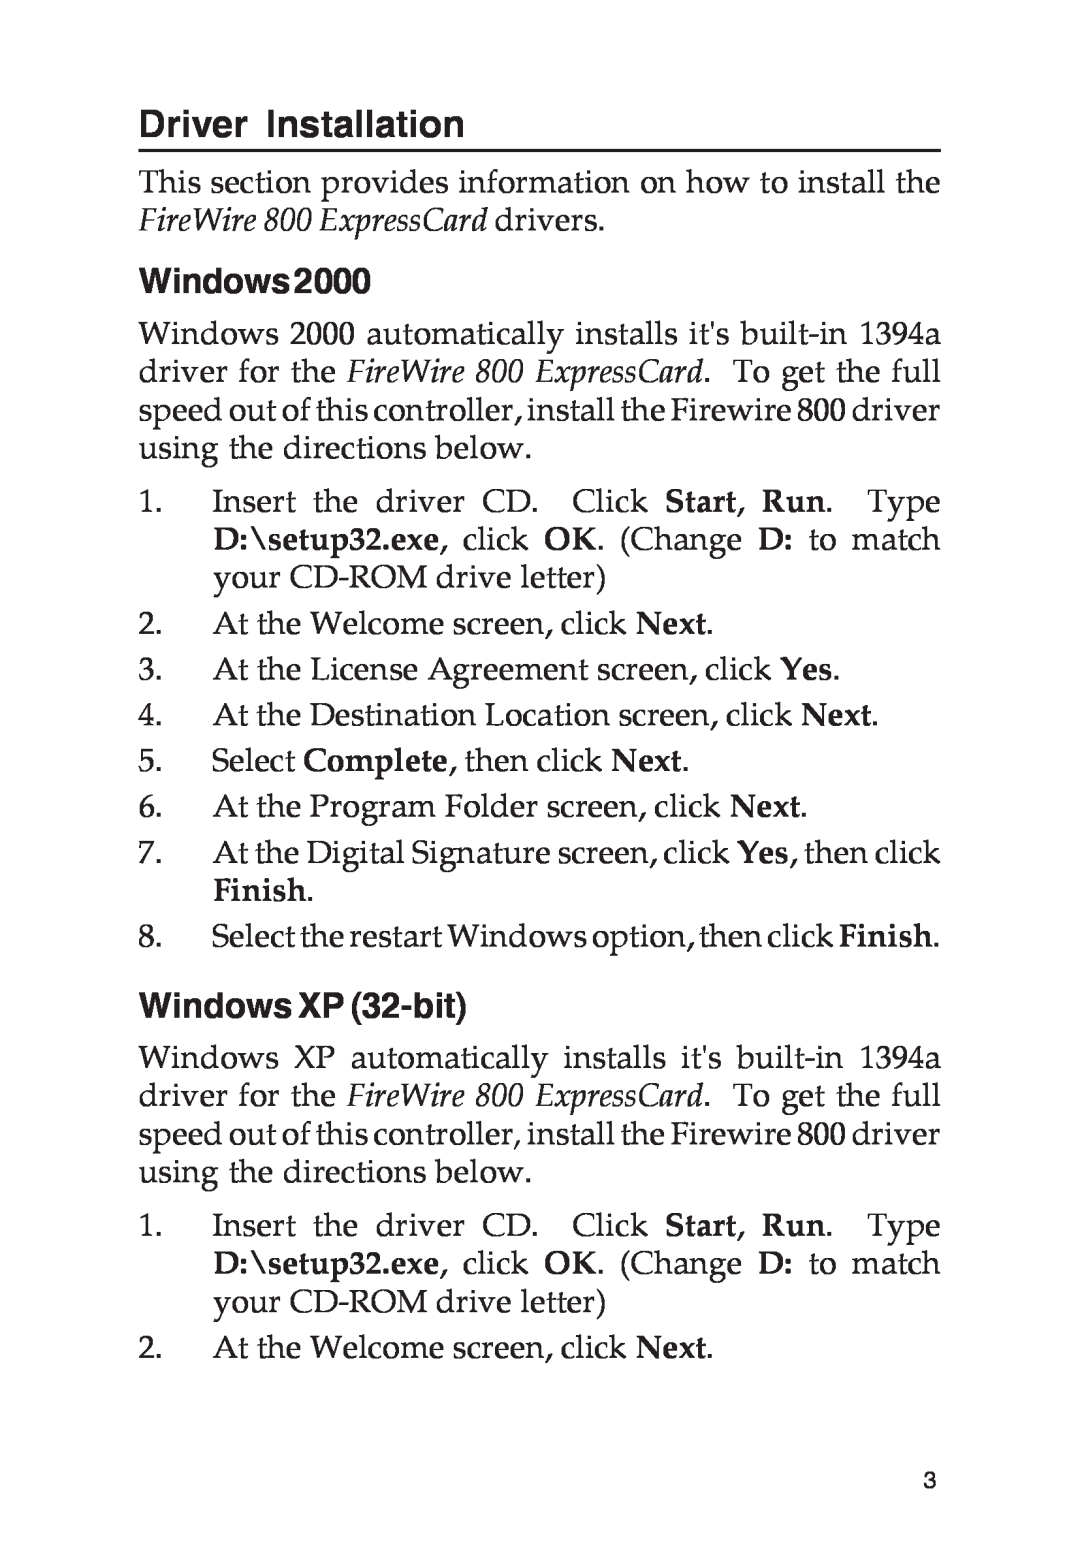 SIIG 700 manual Driver Installation, Windows2000, Windows XP 32-bit 